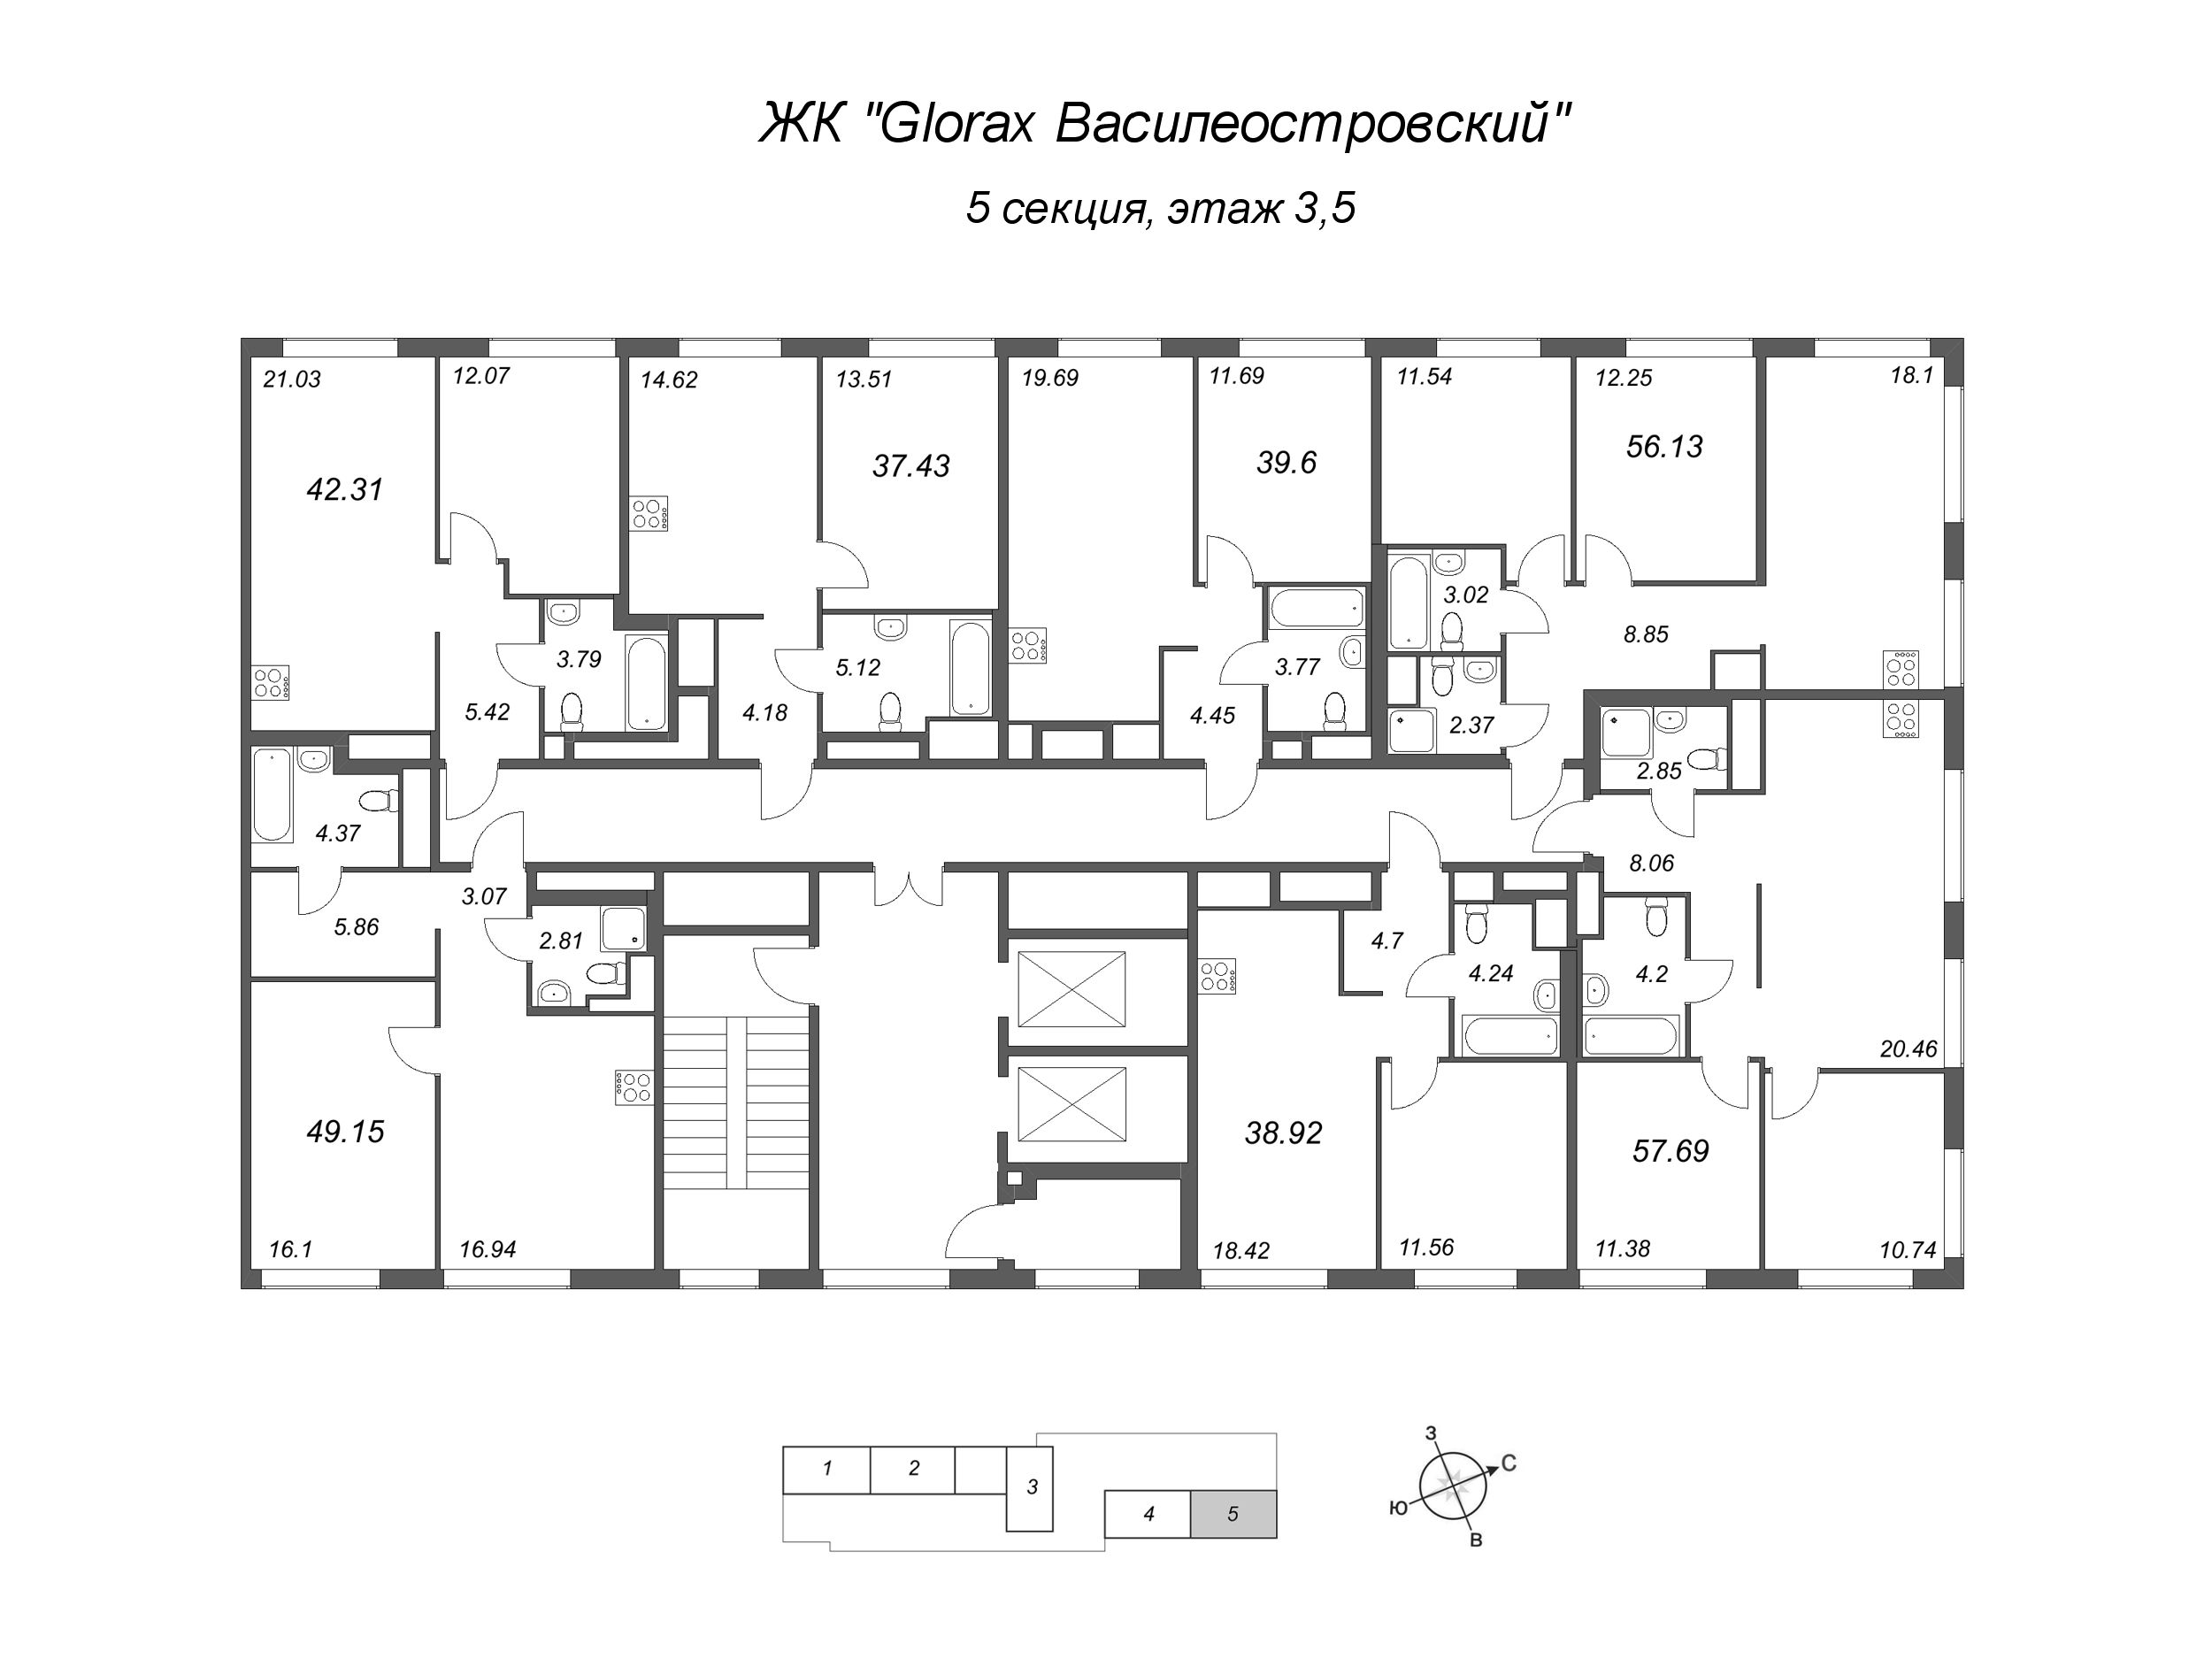 2-комнатная (Евро) квартира, 38.92 м² - планировка этажа